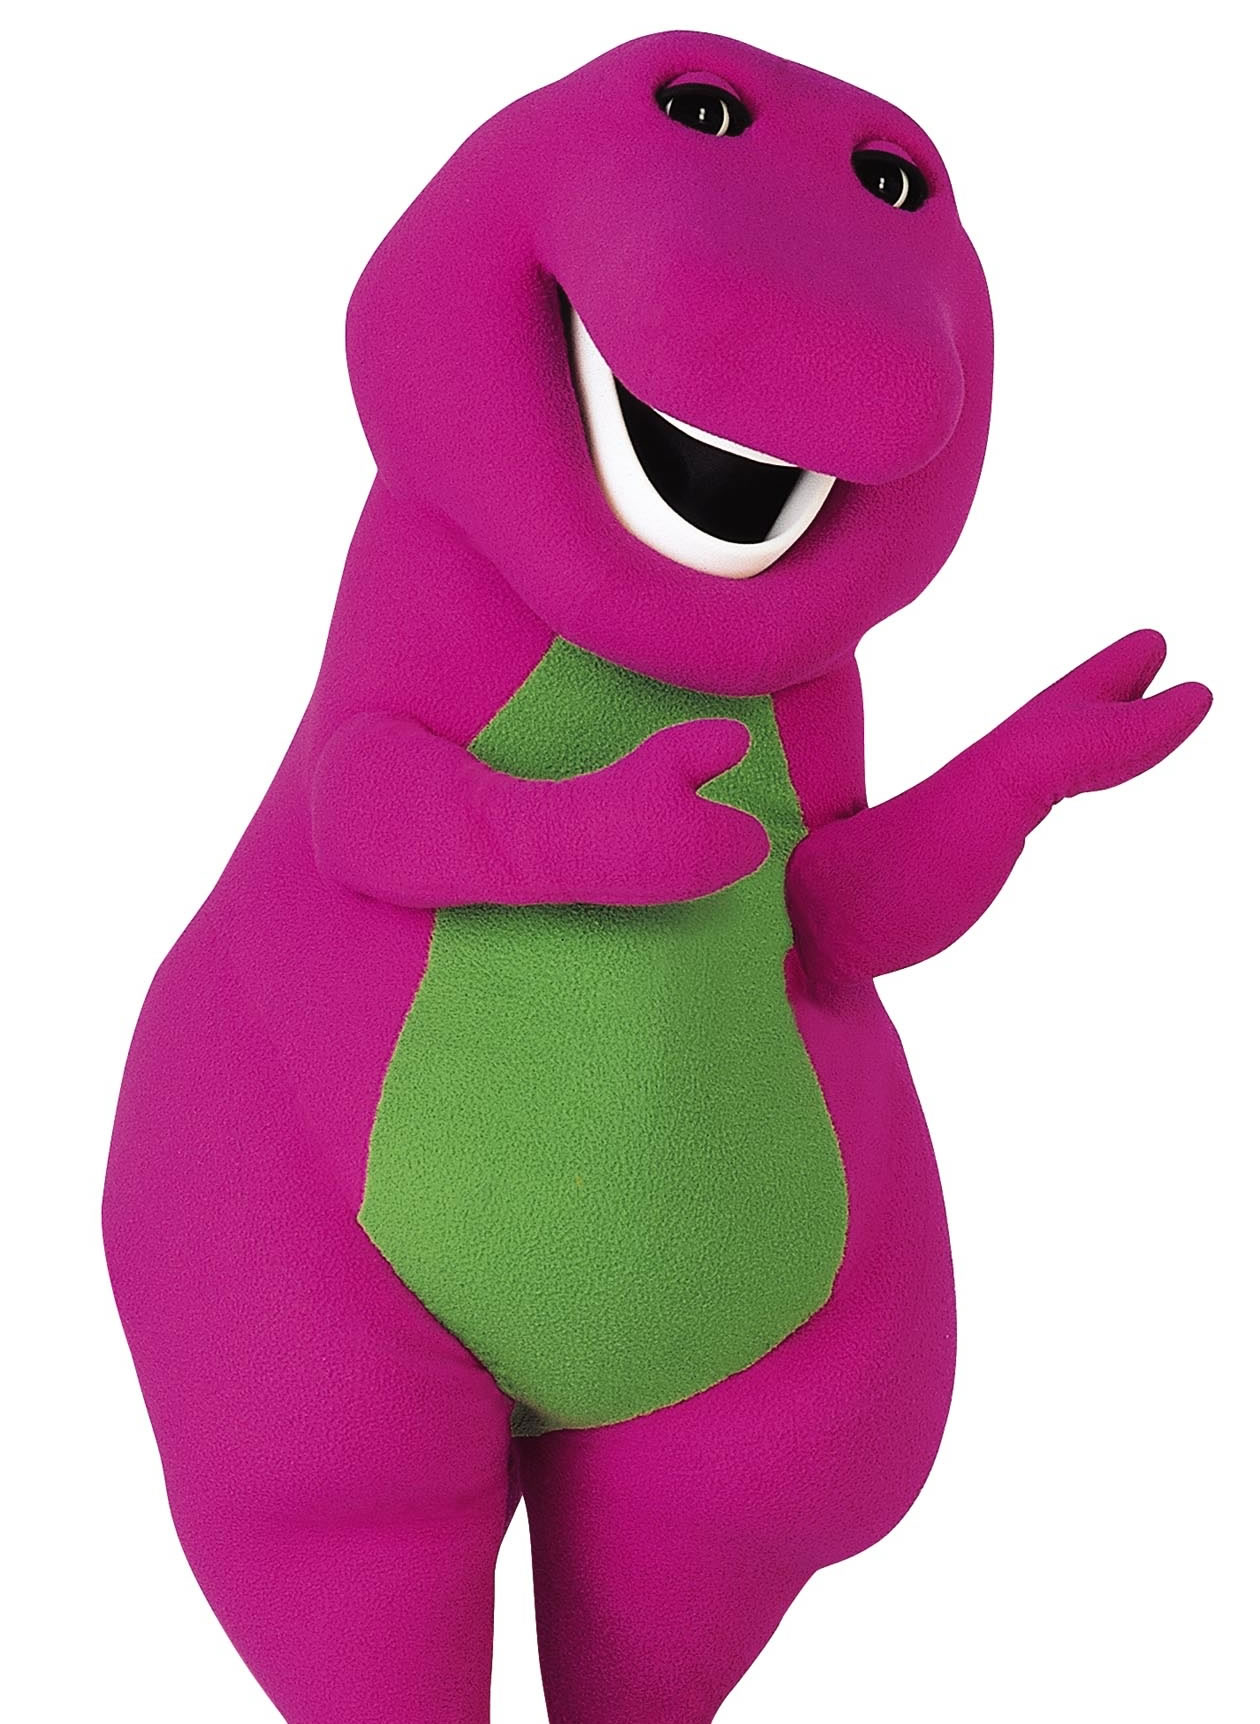 Barney The Dinosaur Wallpaper Wesharepics